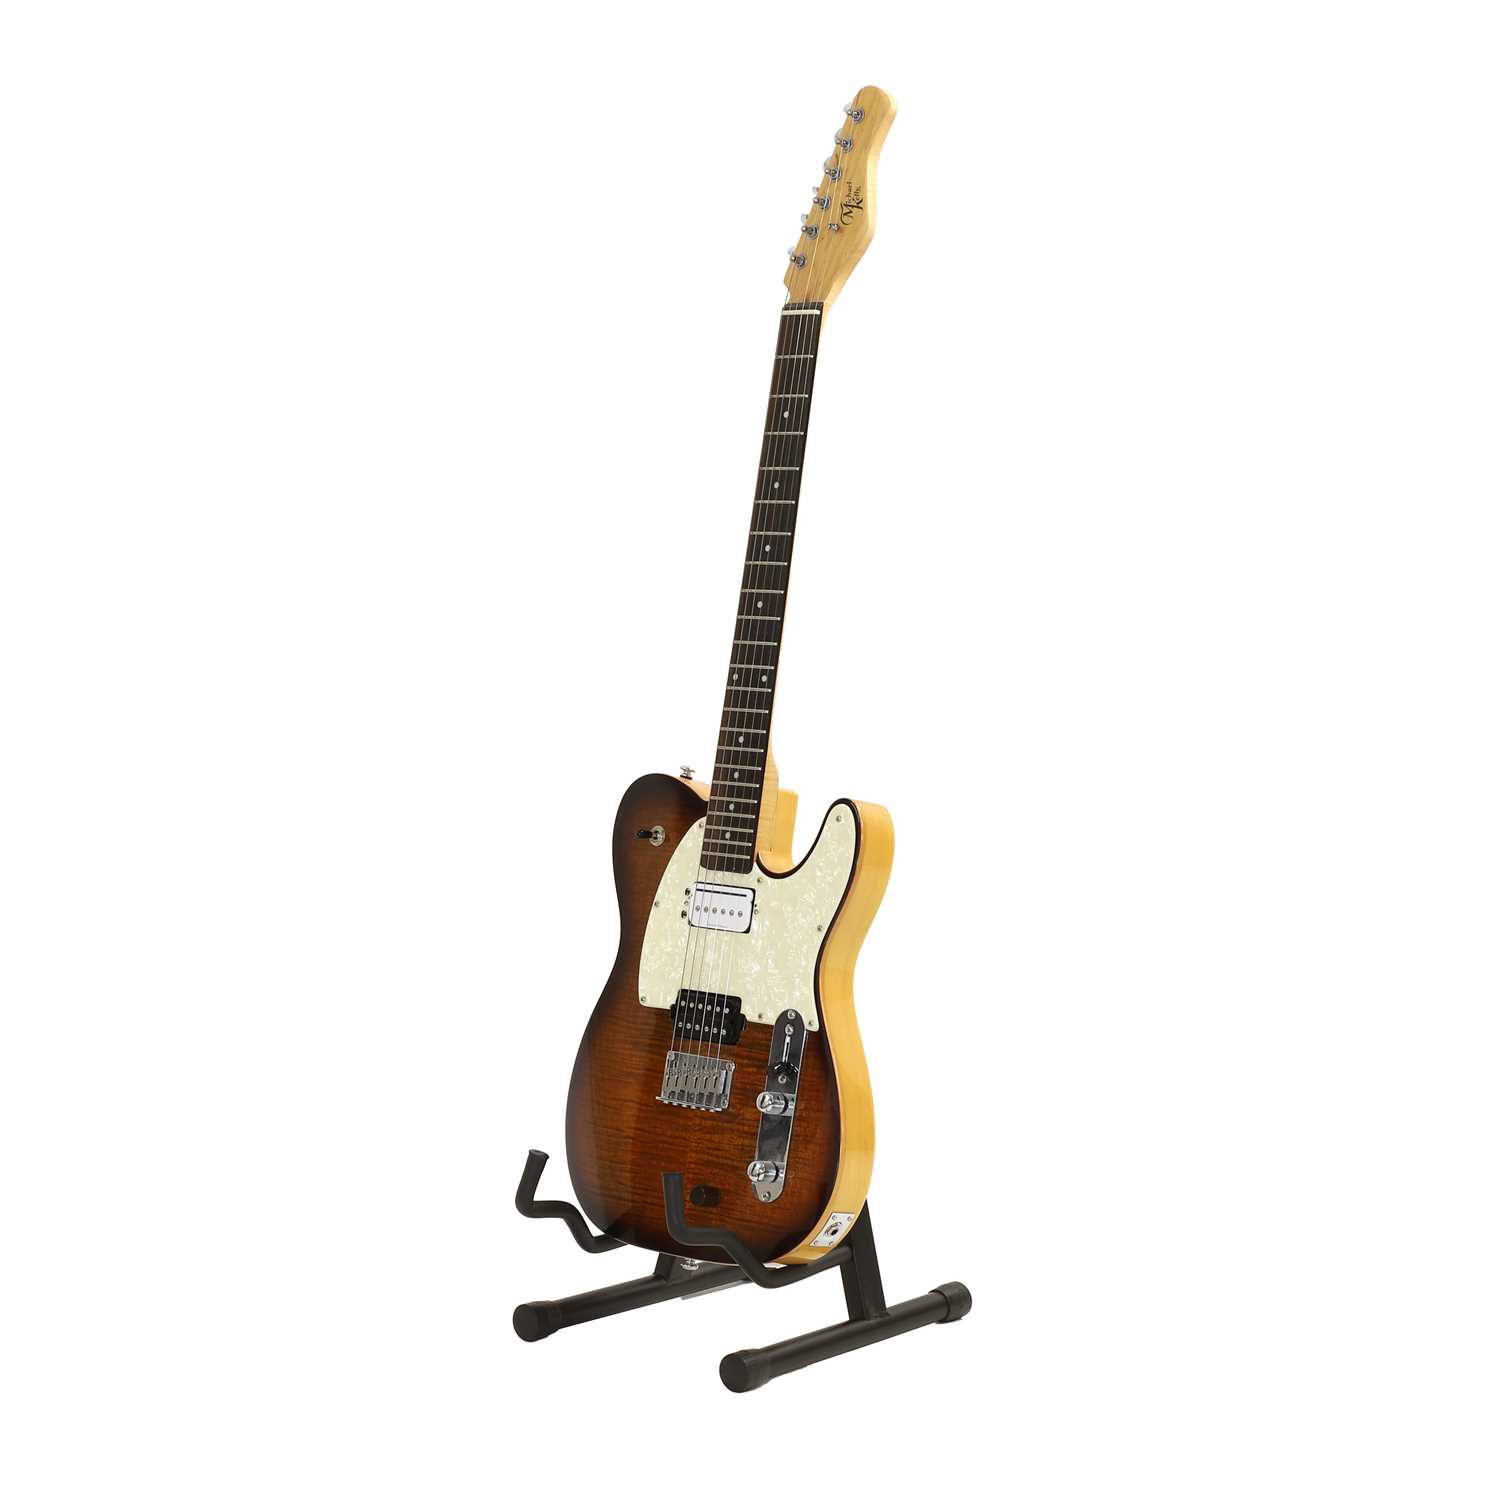 A Michael Kelly Robbie Gladwell custom hybrid electric guitar, - Image 6 of 13